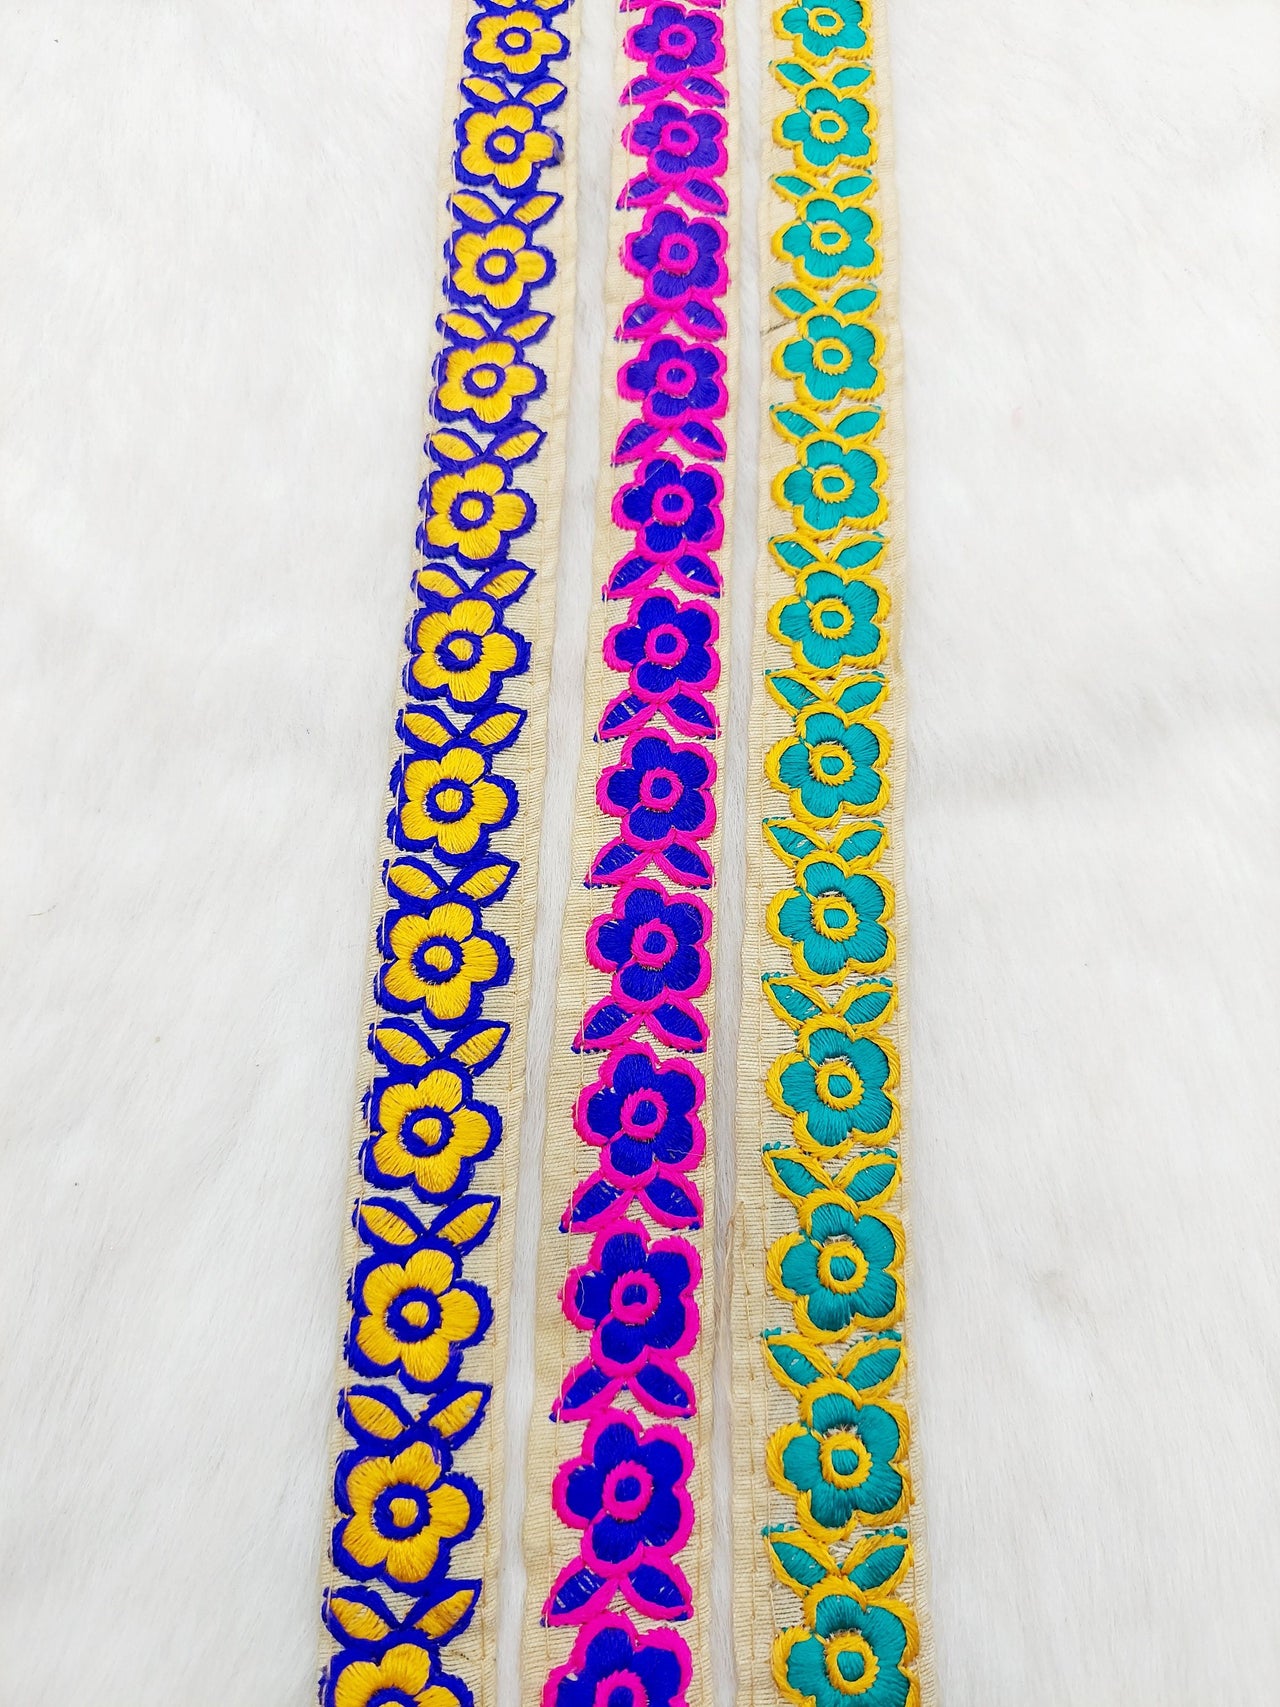 Beige Art Silk Lace Trim in Floral Embroidery, Decorative Trim, Trim By 3 Yards